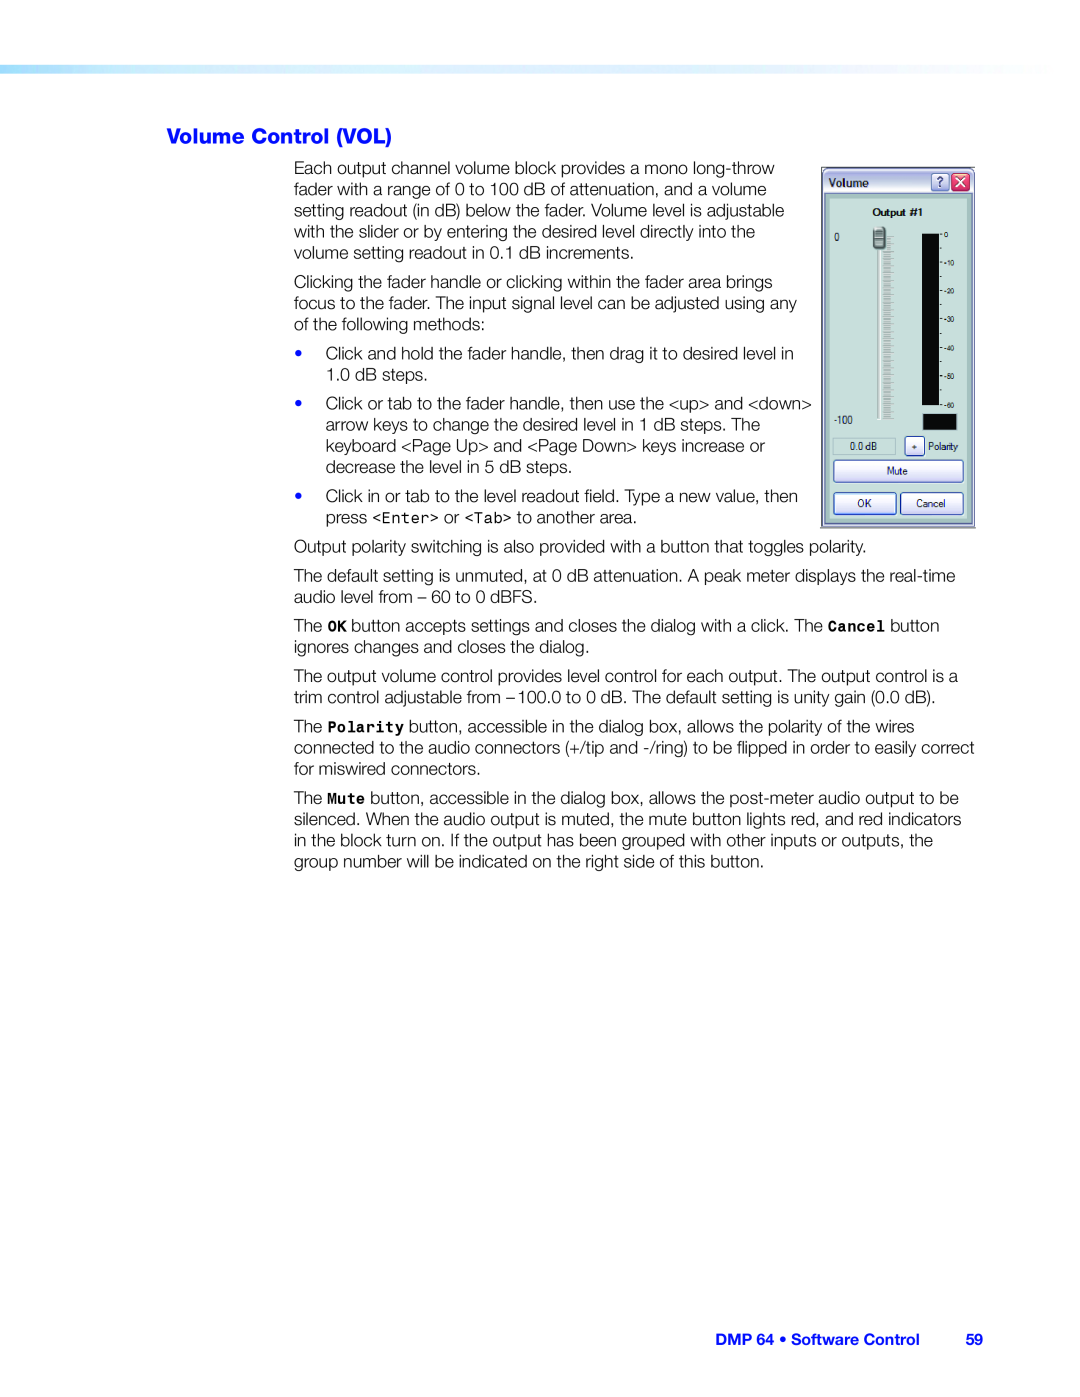 Extron electronic manual Volume Control VOL, DMP 64 • Software Control 